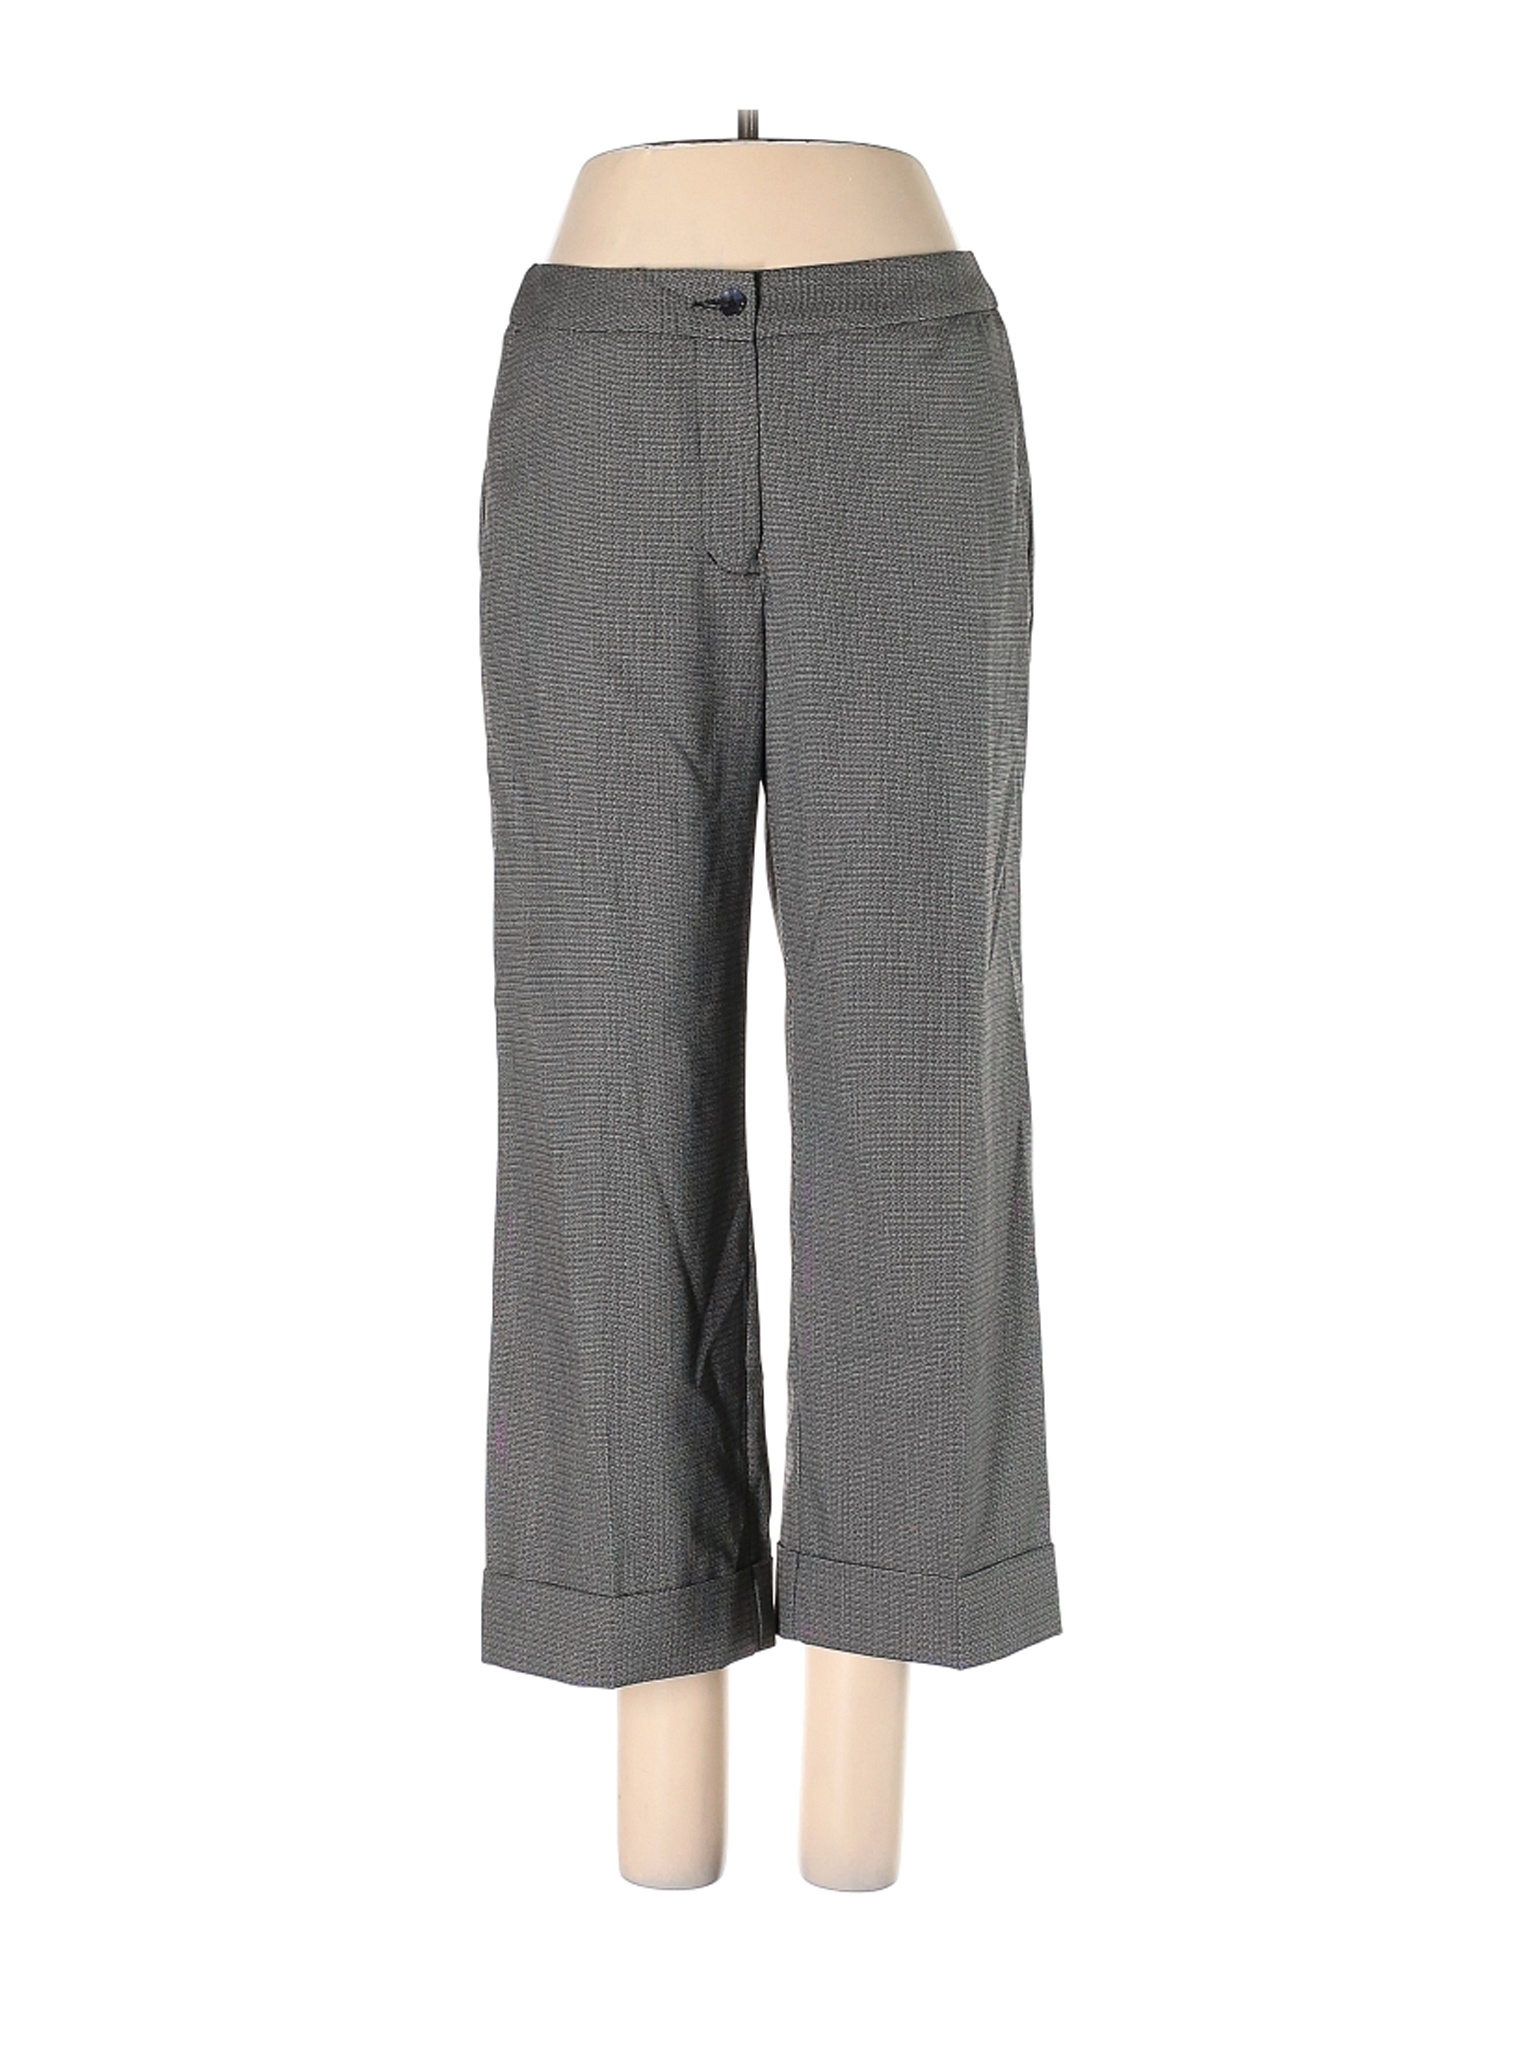 NWT Chico's Women Gray Dress Pants S | eBay